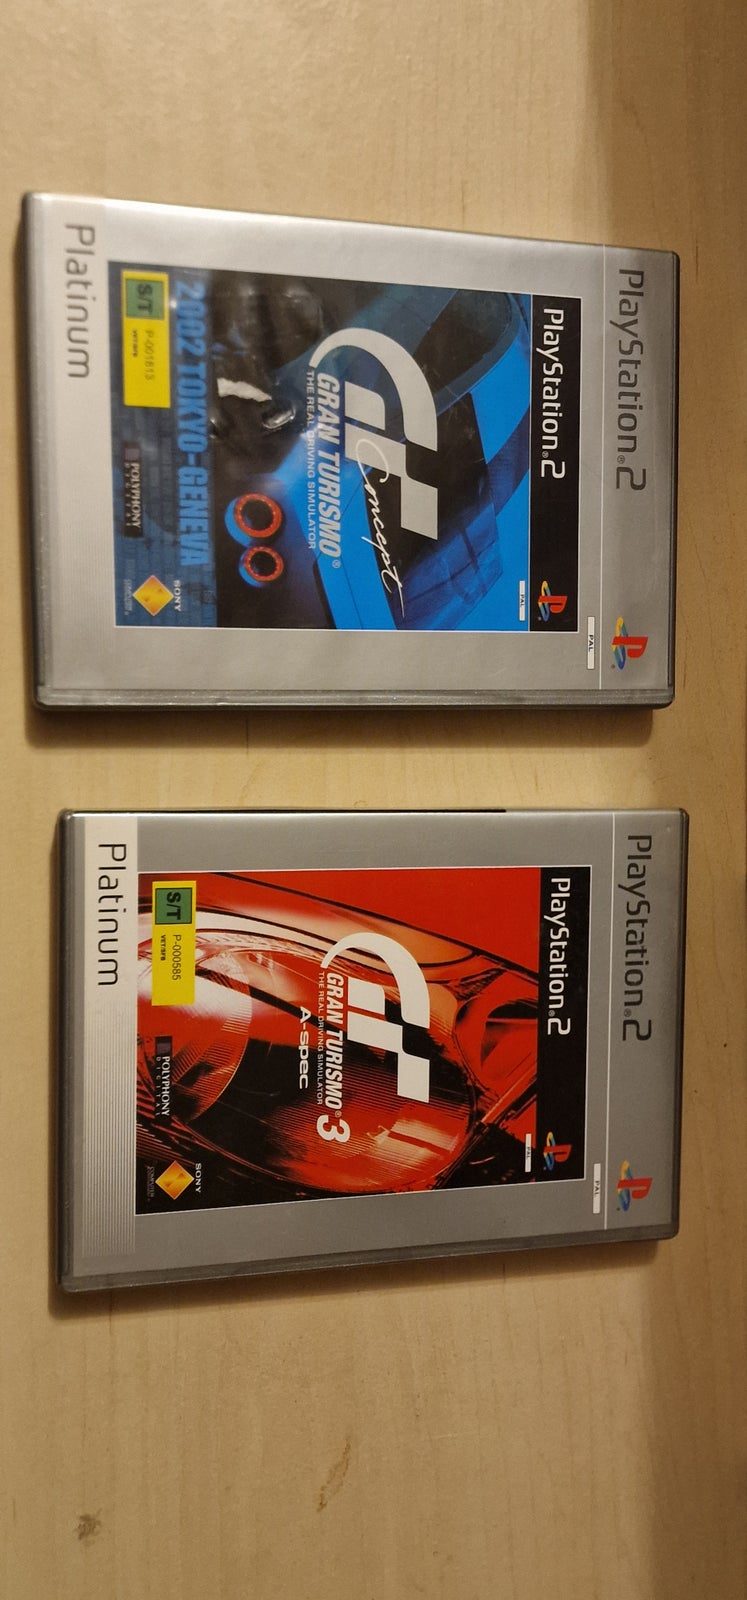 Grand Turismo 3 spil fra Serien, PS2